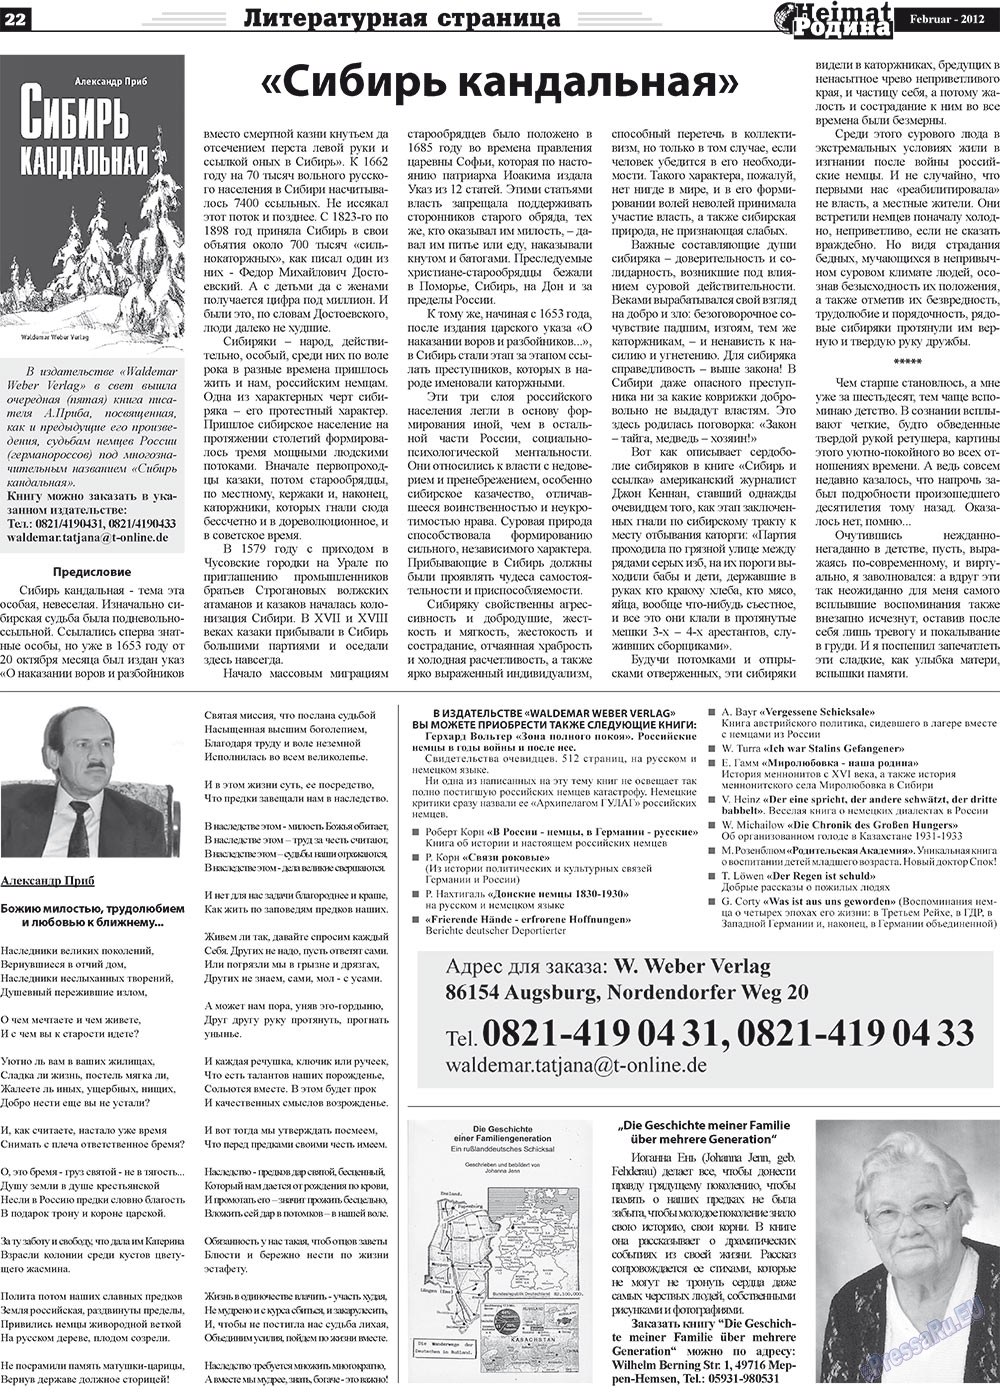 Heimat-Родина, газета. 2012 №2 стр.22